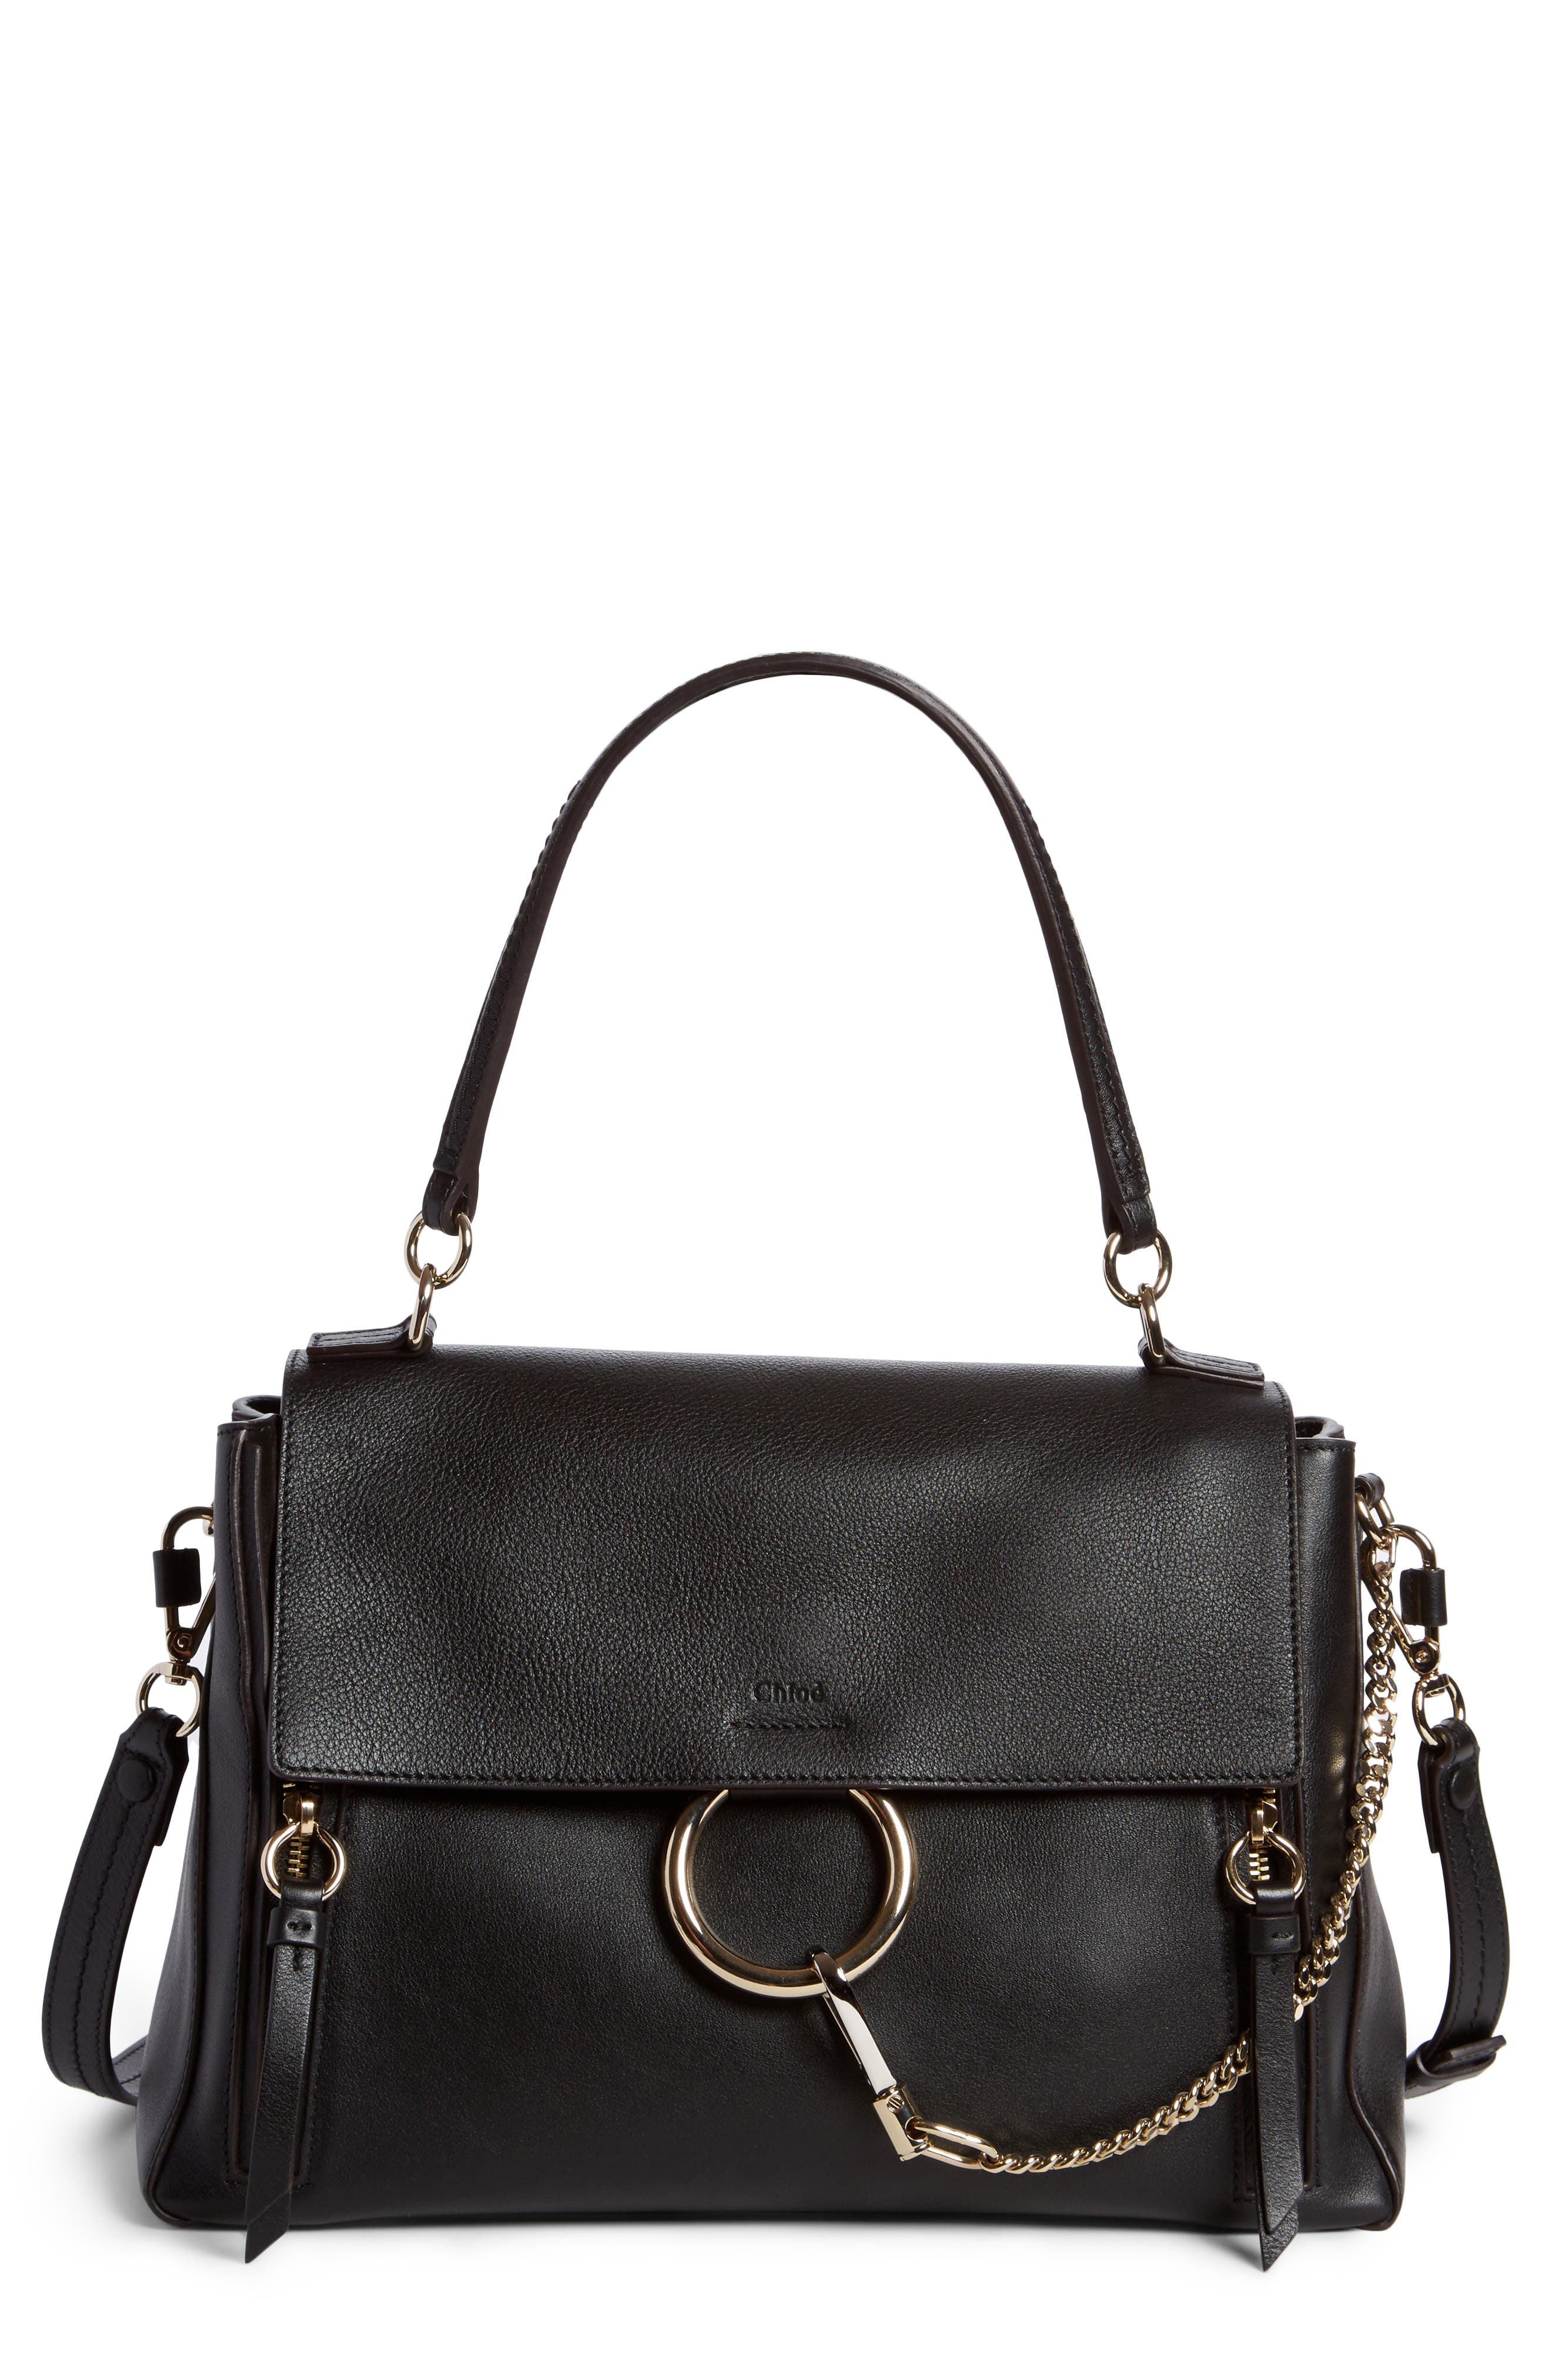 black satchel purses